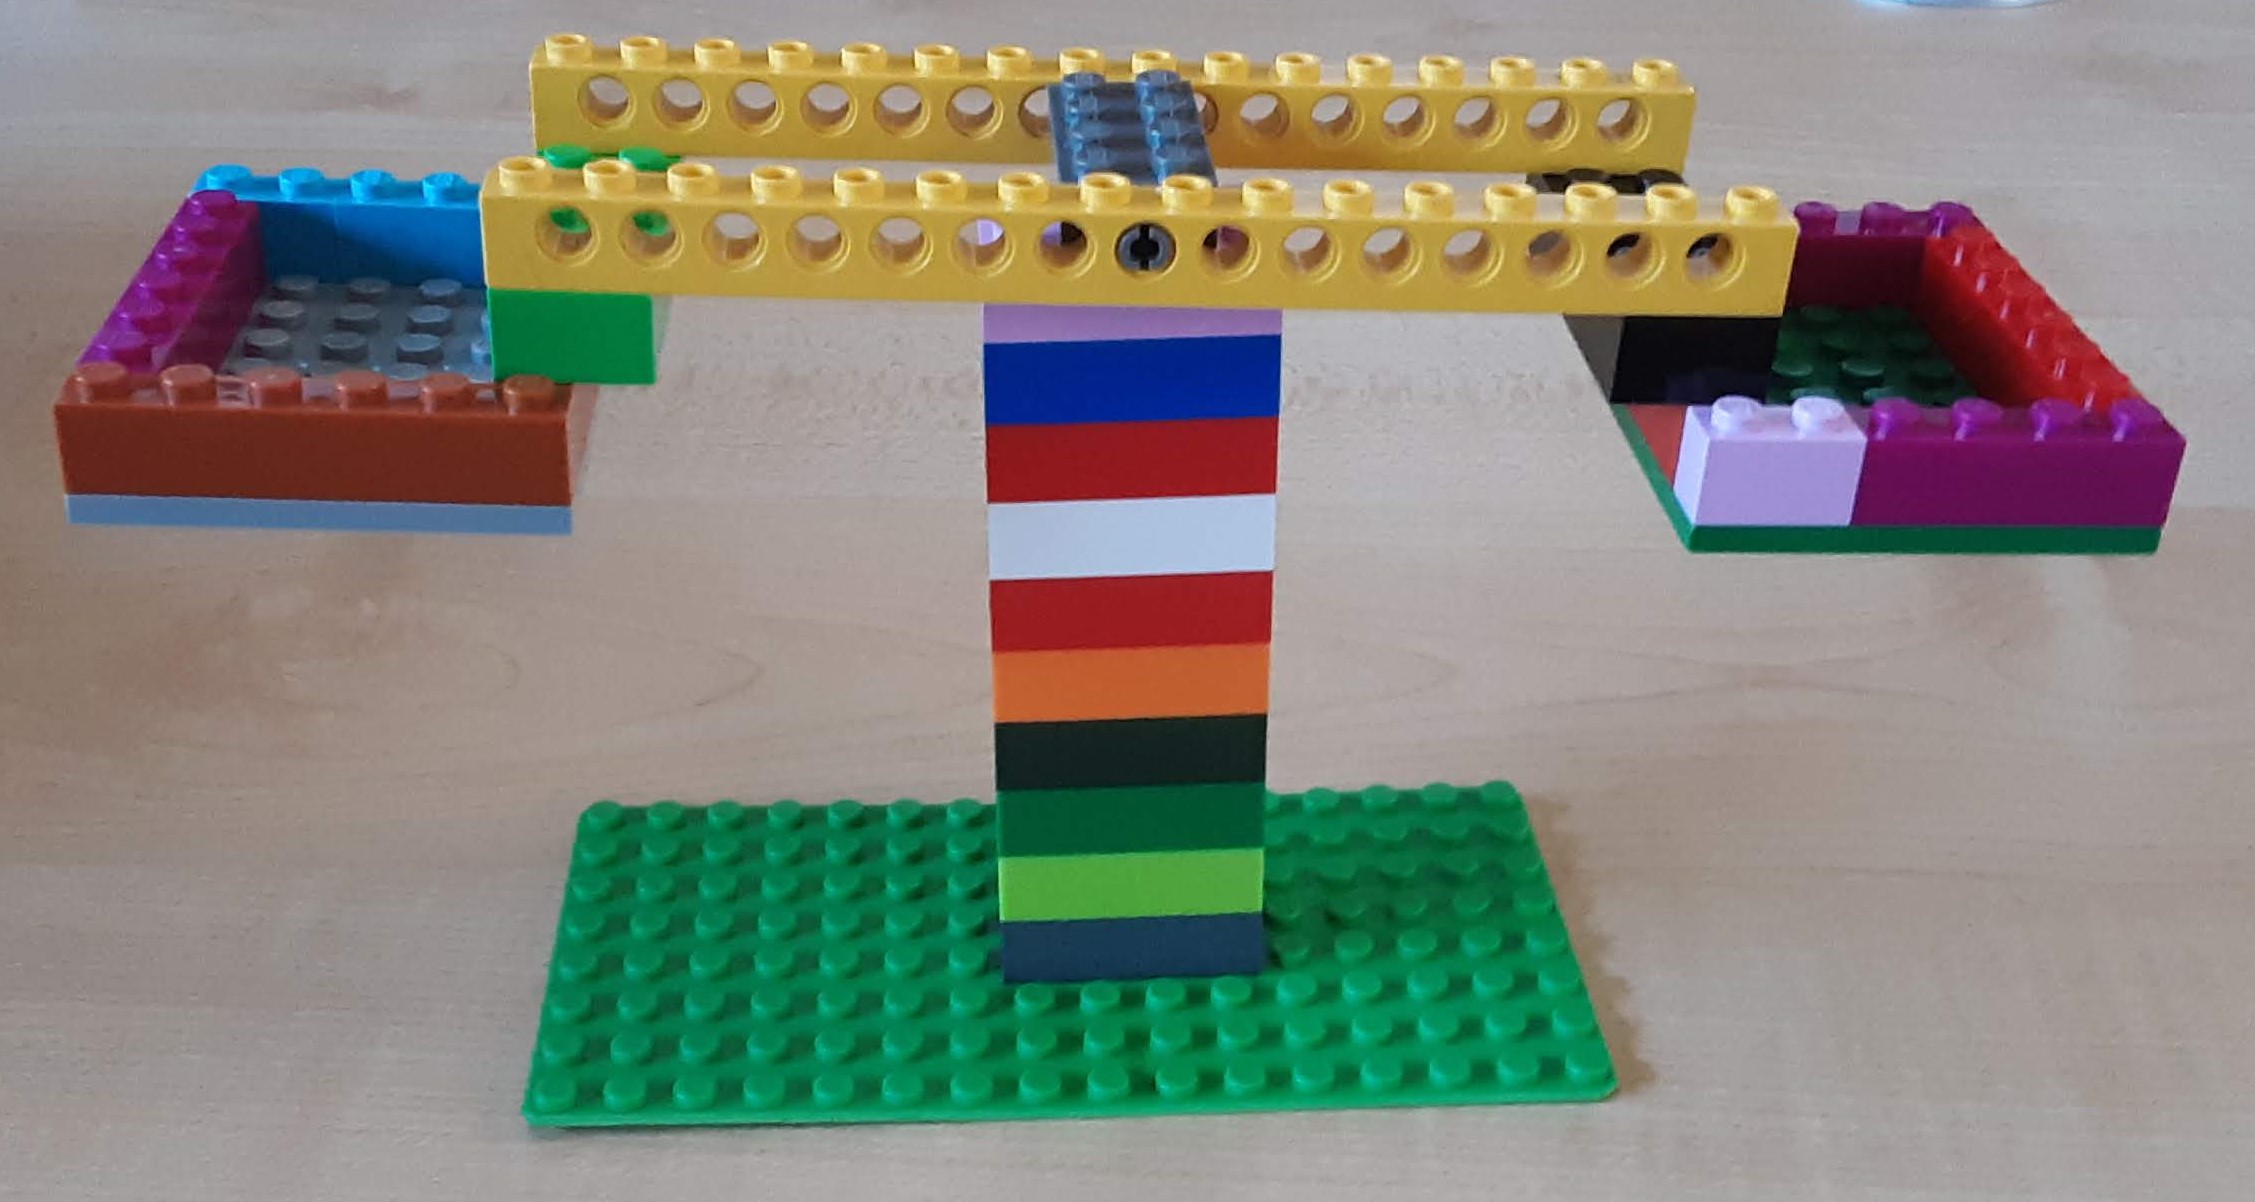 A balance made of LEGO